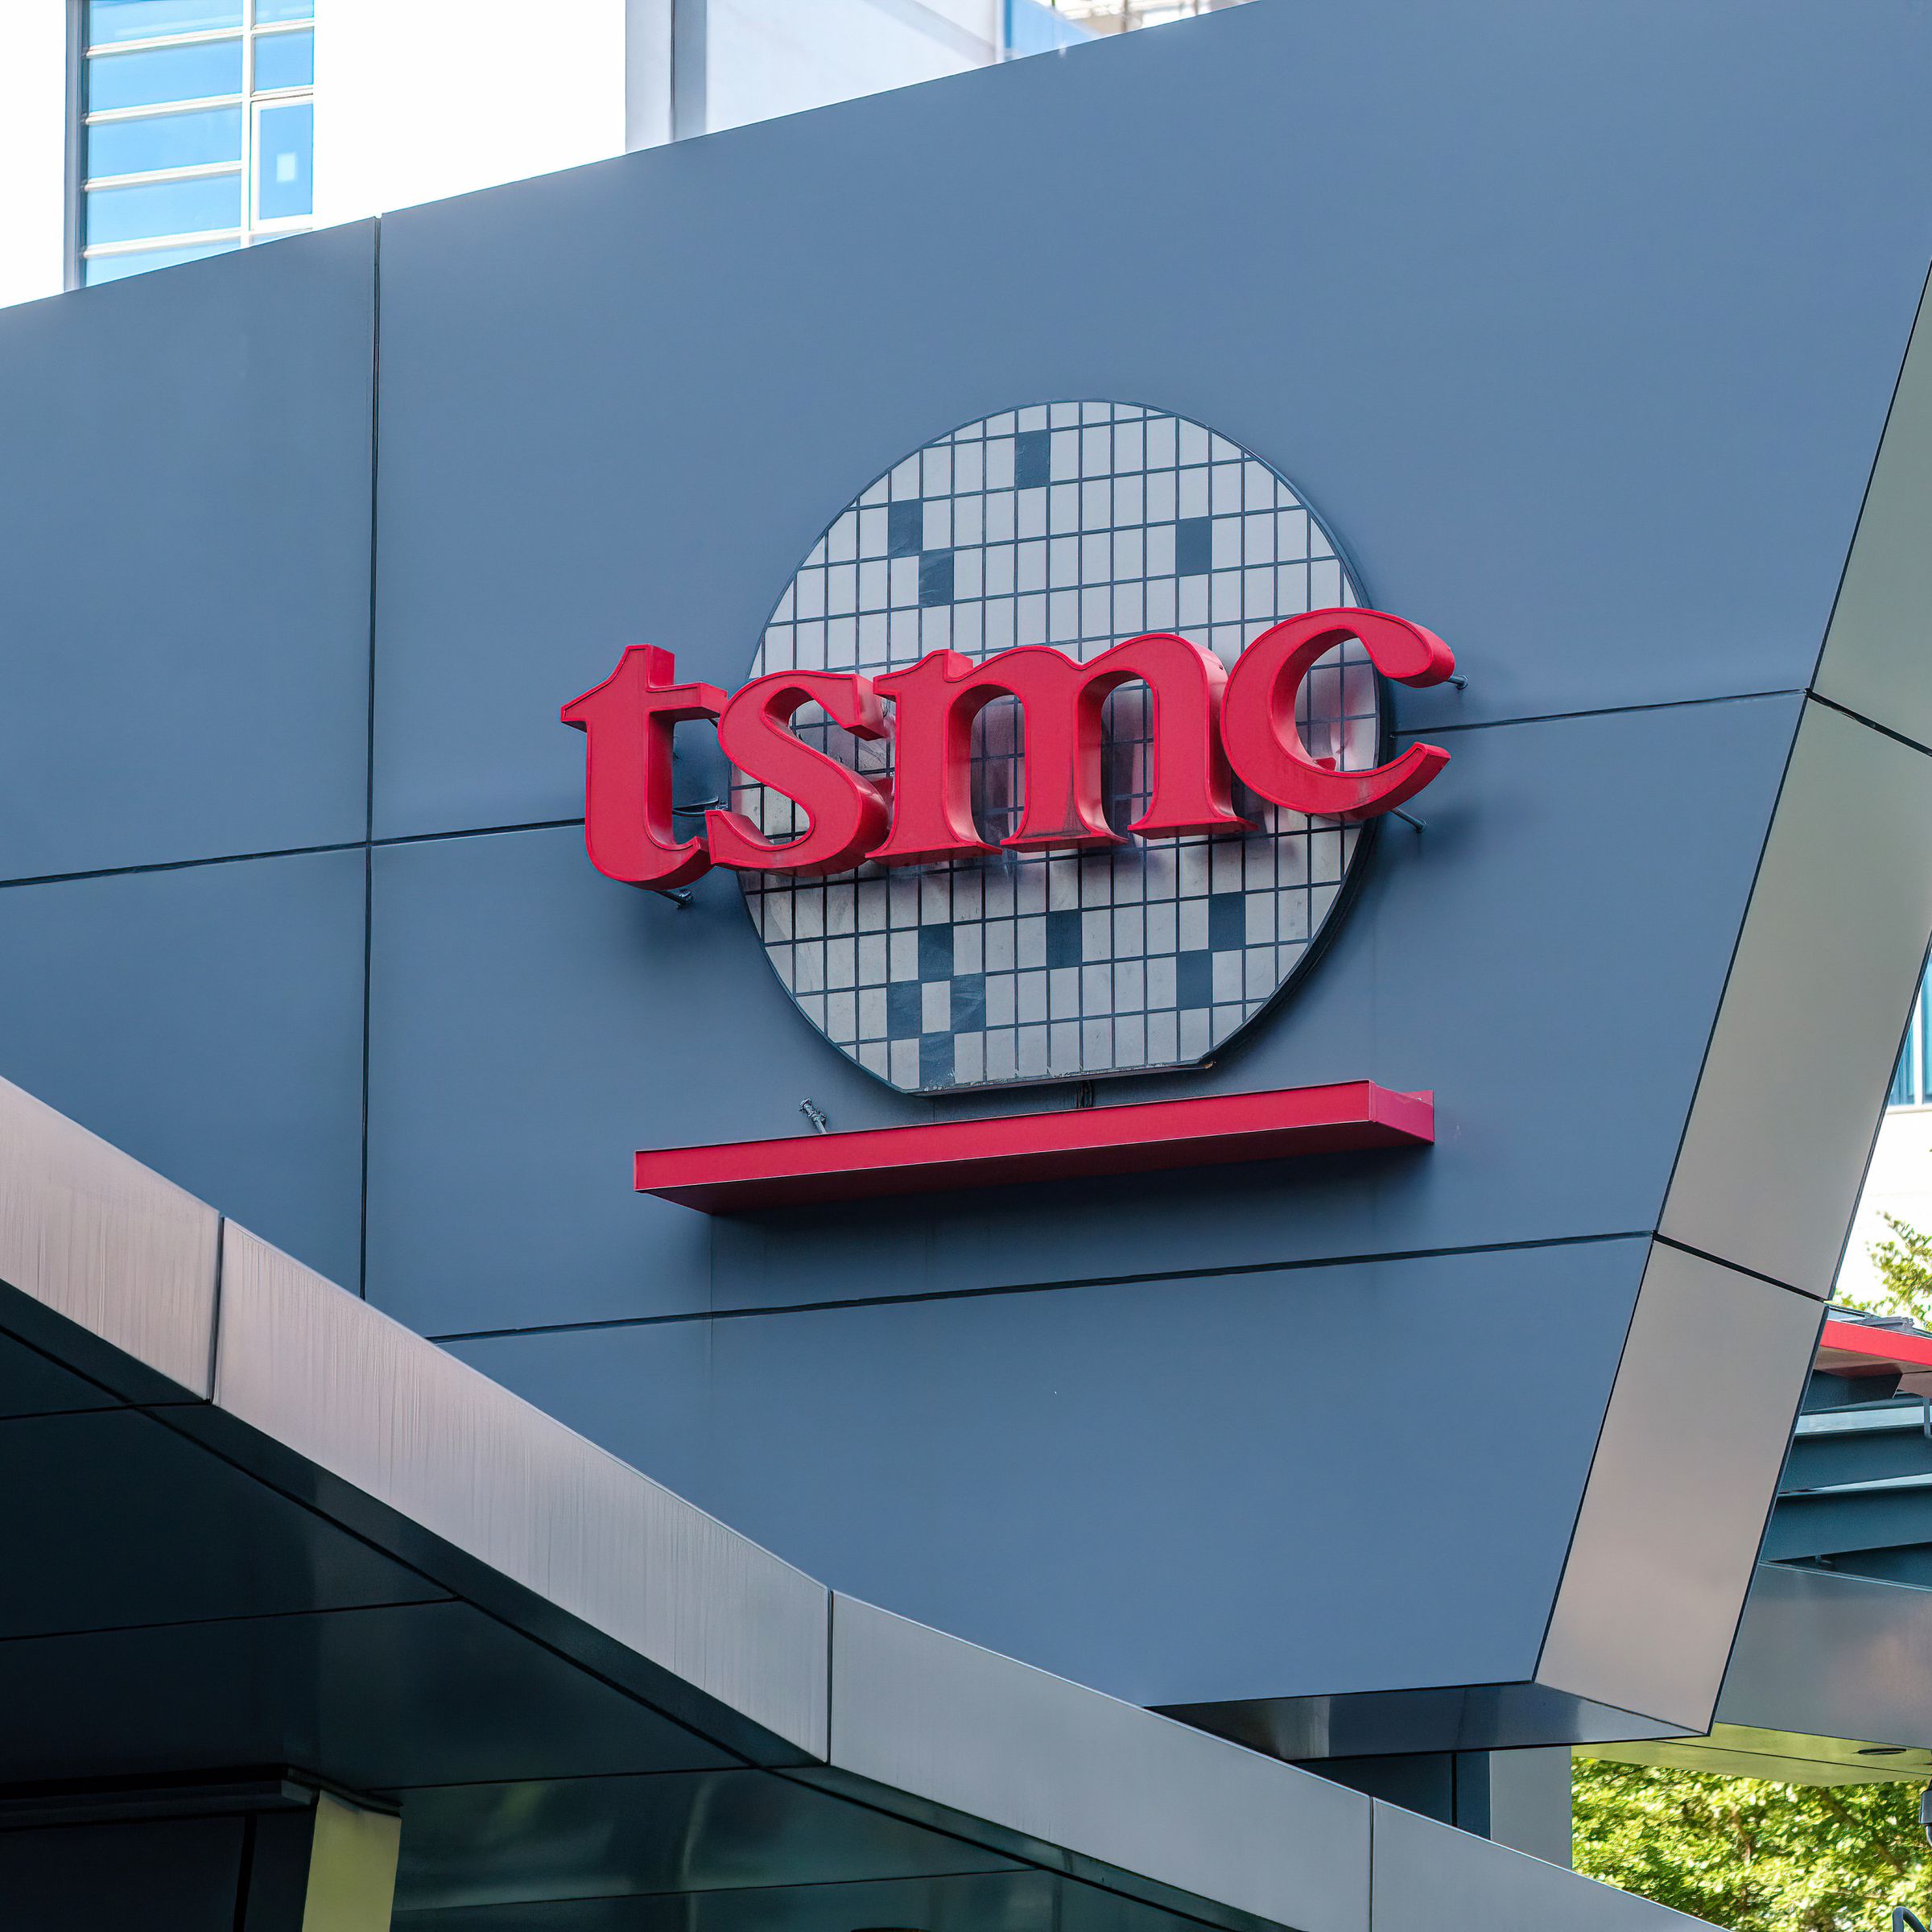 The TSMC (Taiwan Semiconductor Manufacturing Company) logo...